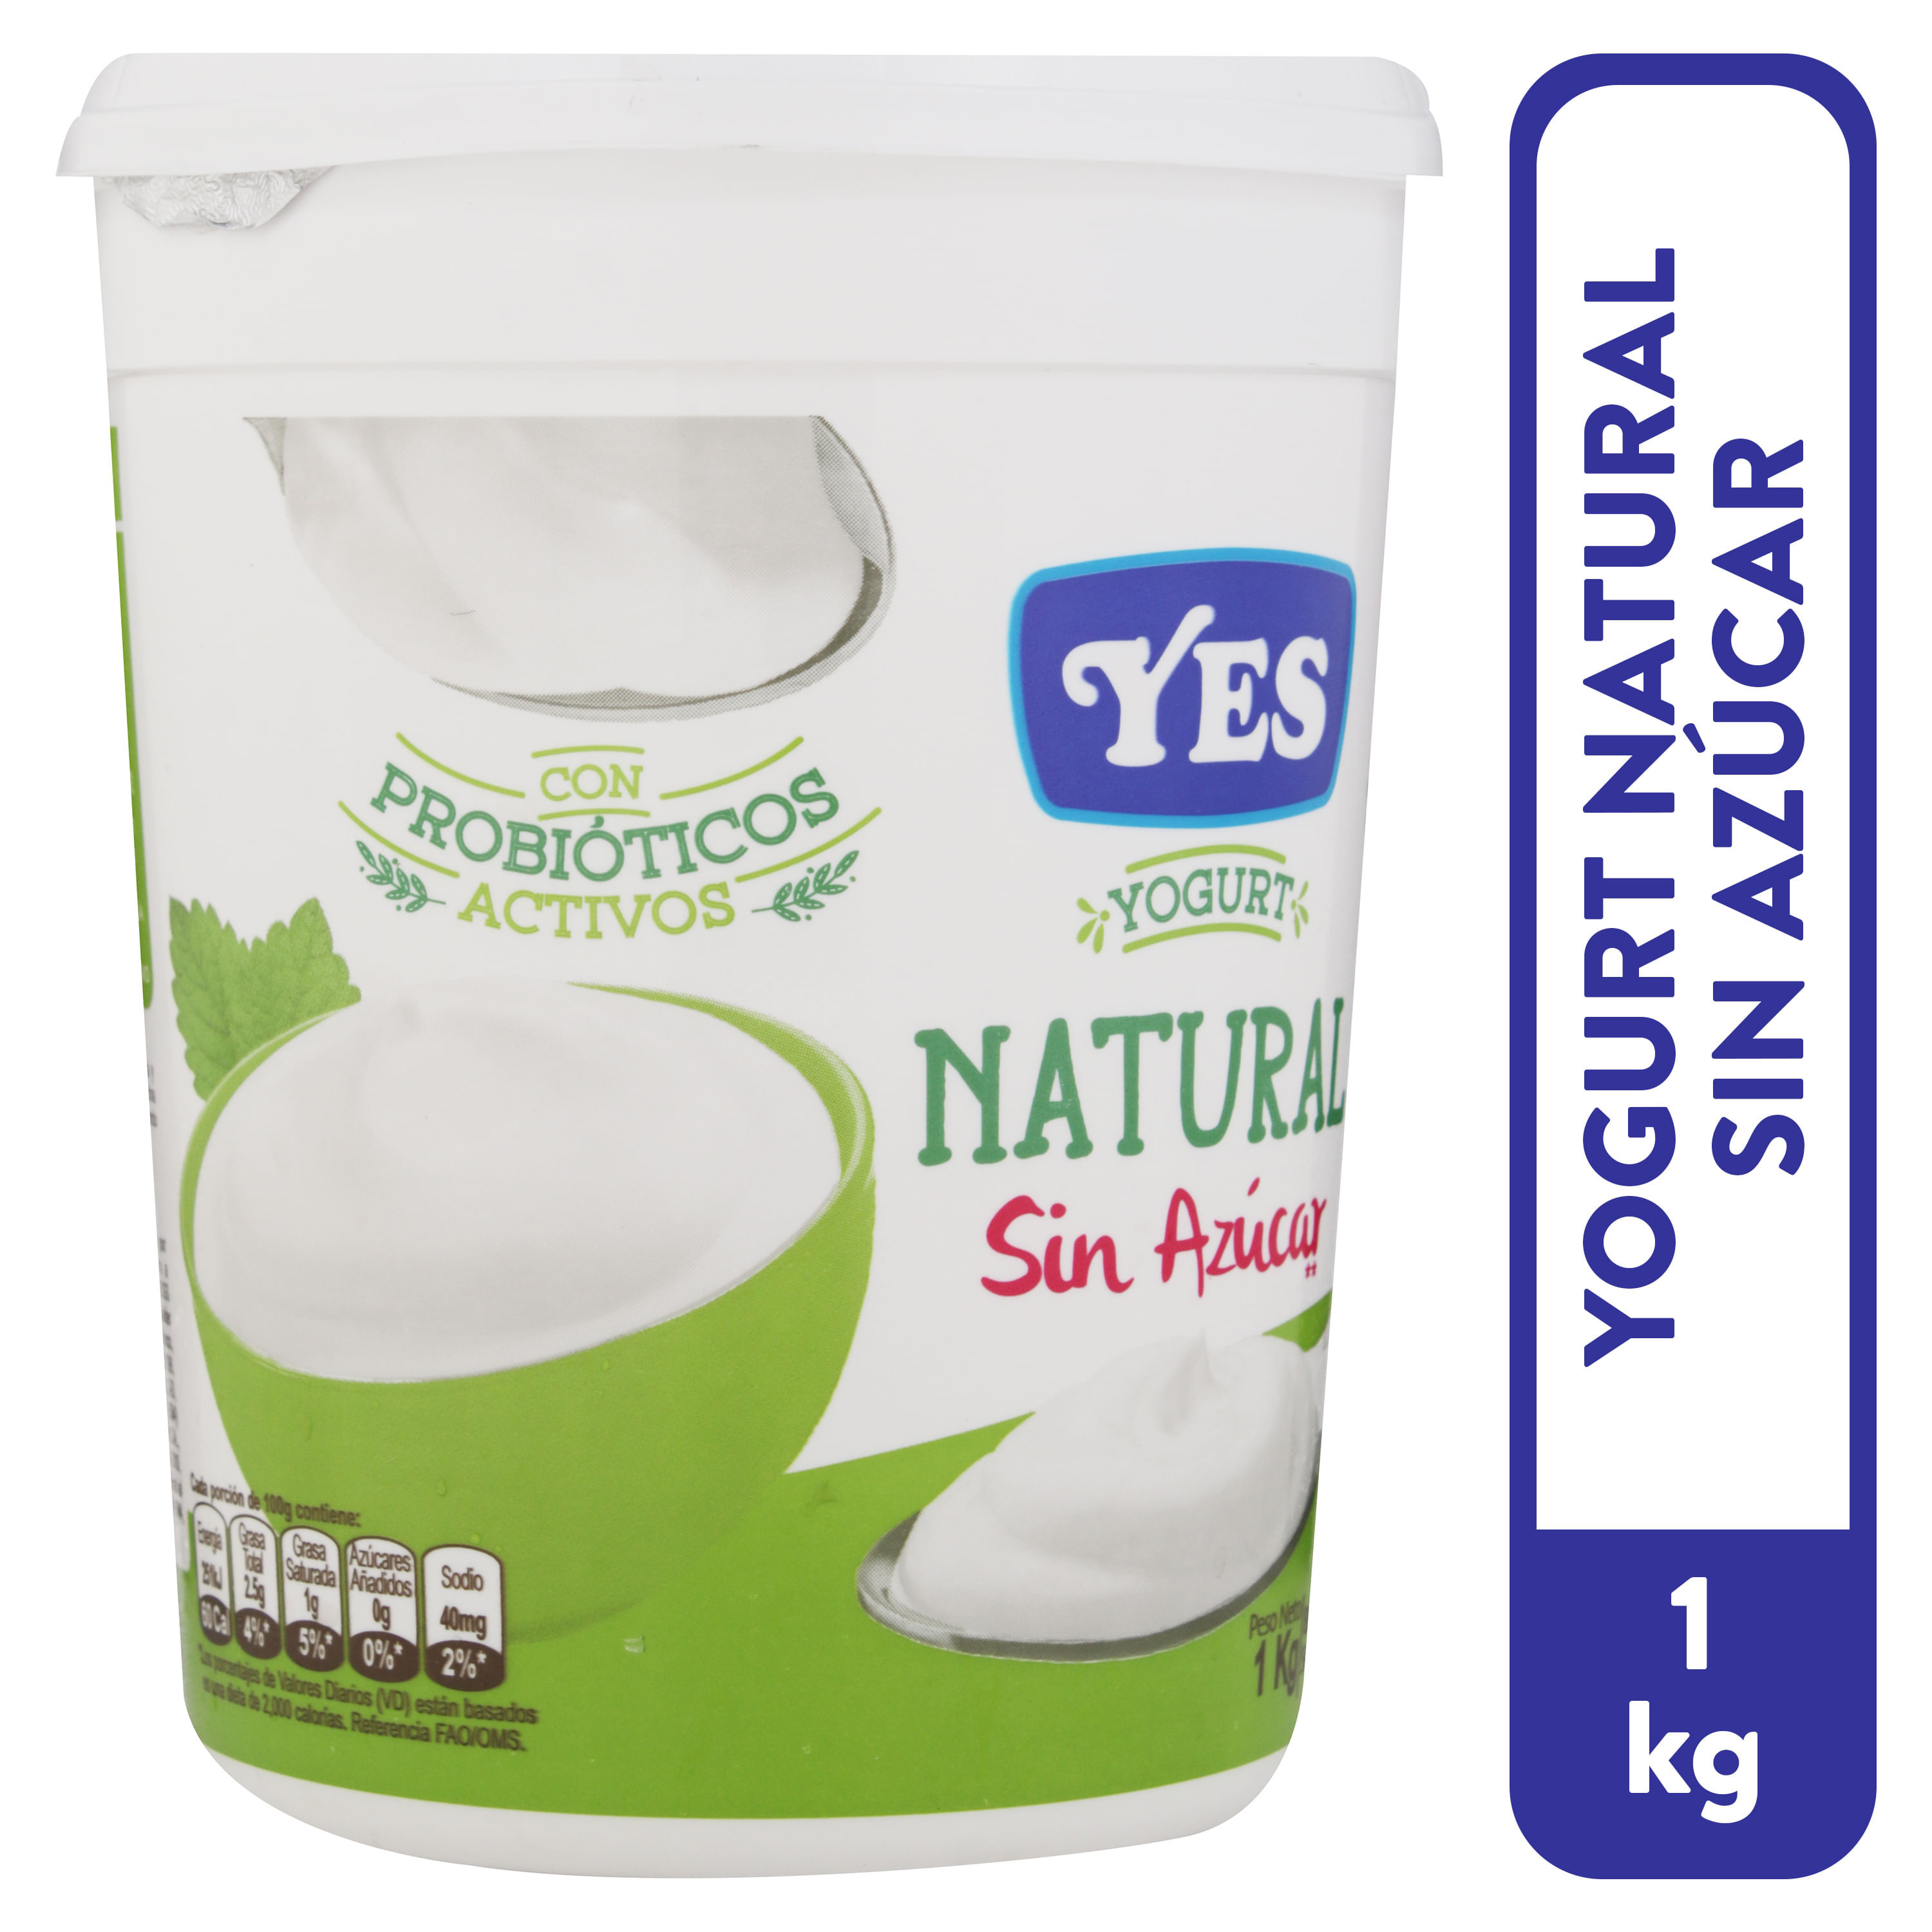 Yogurt Natural (sin azucar añadida) - Yoplait - 500g